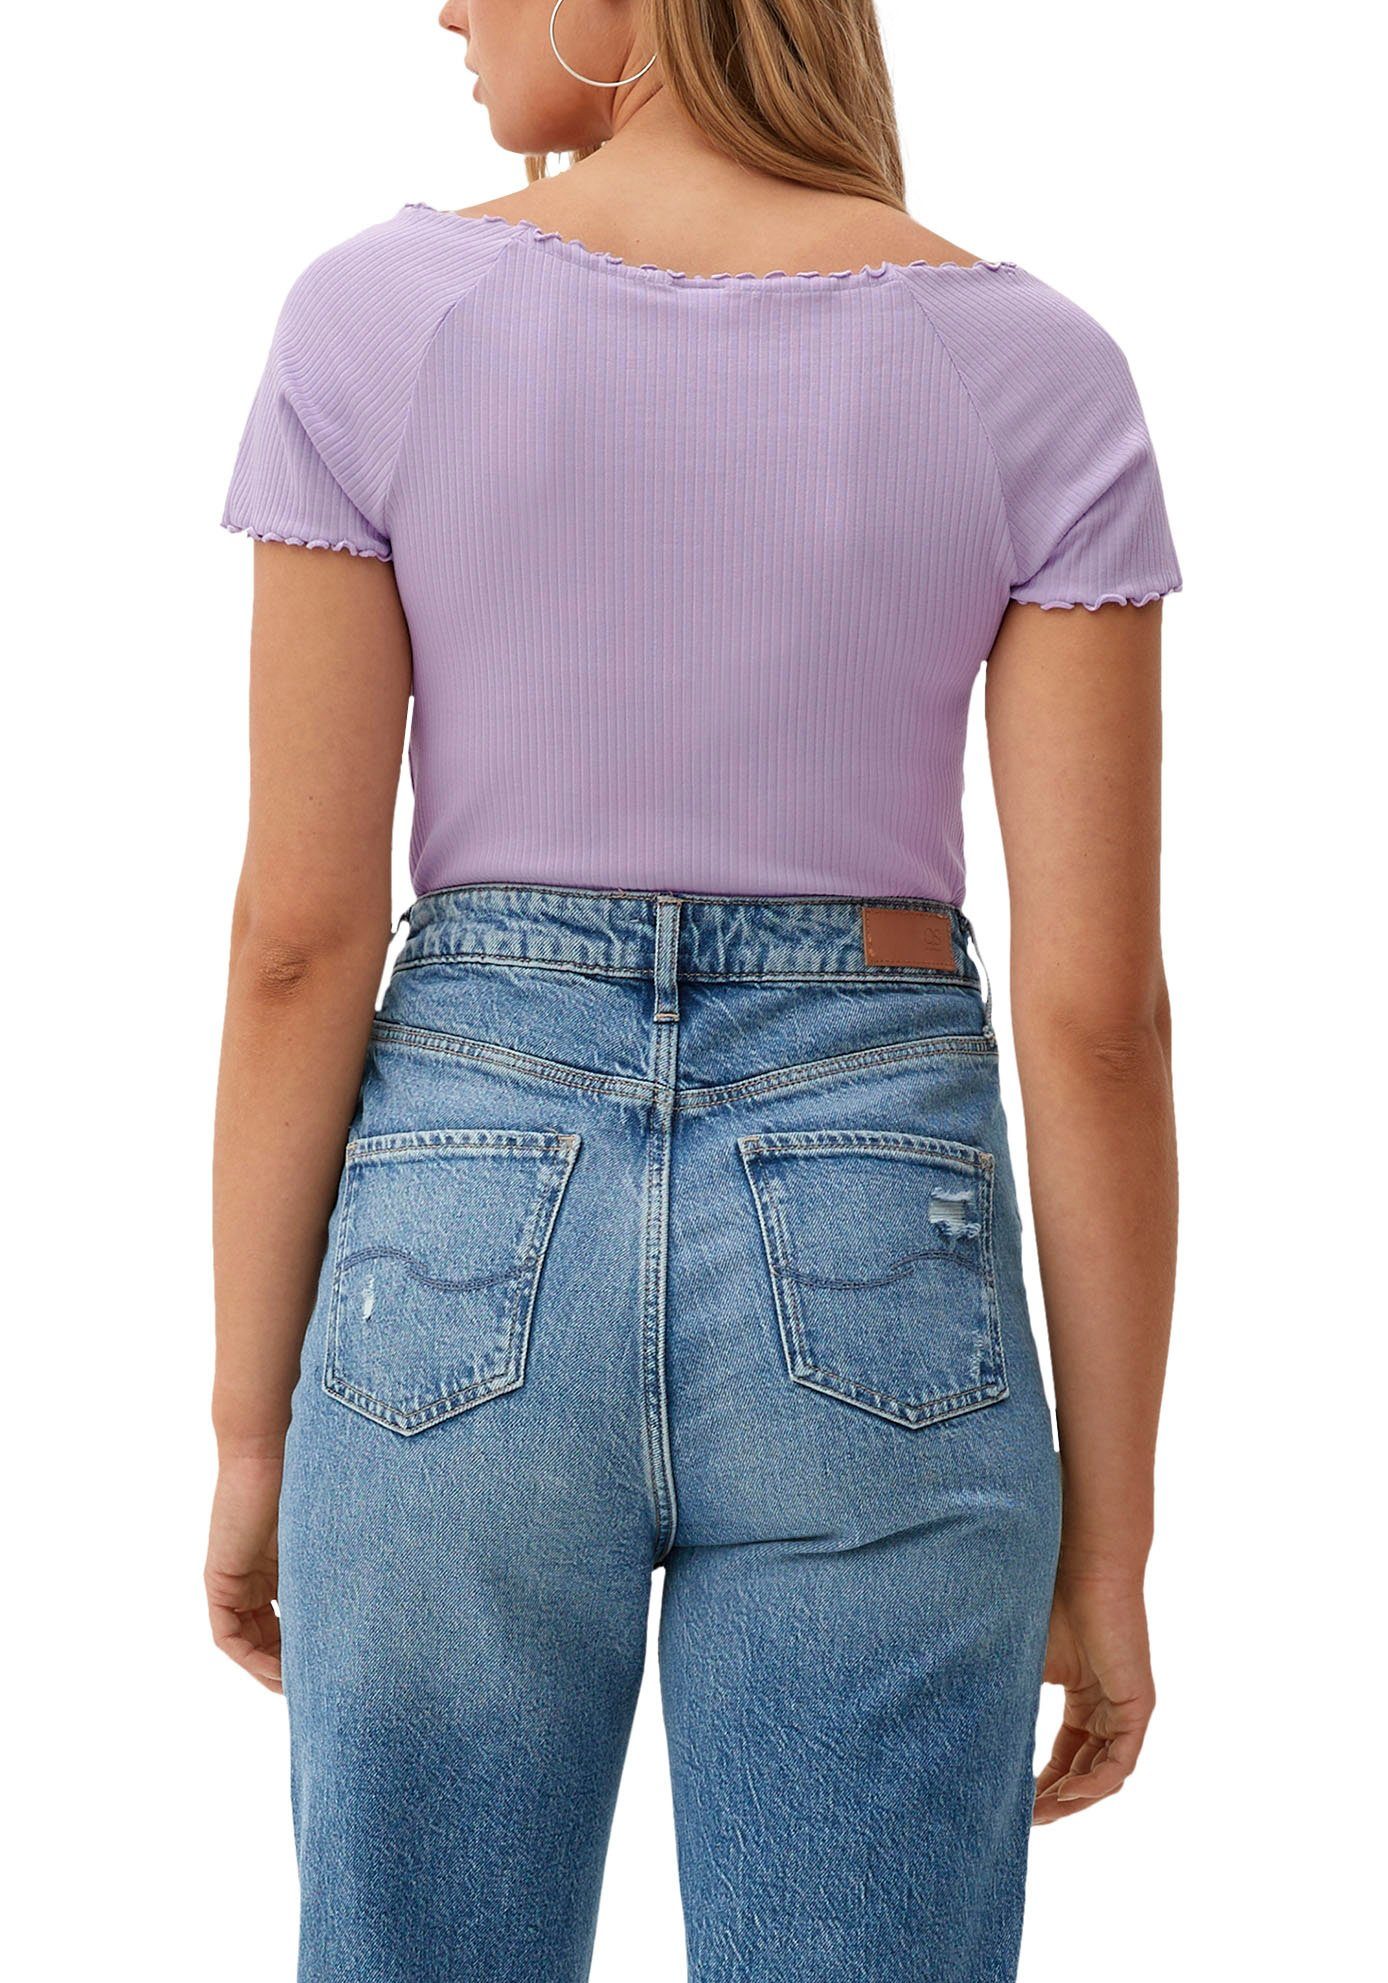 T-Shirt mit lilac/pink Bogenkante QS